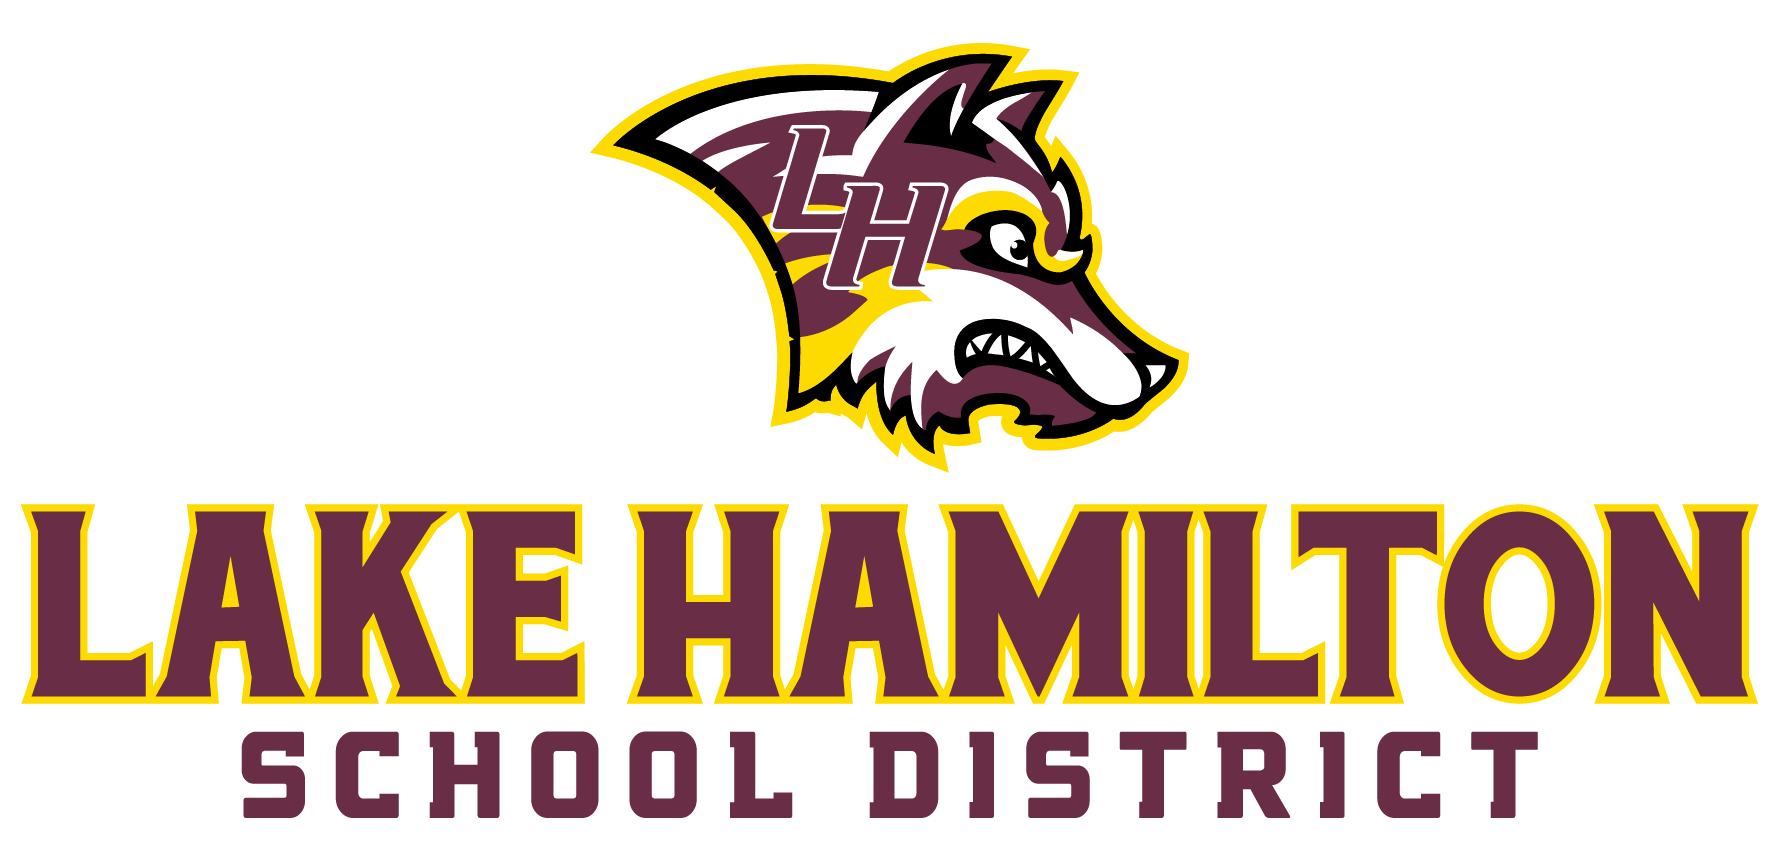 Lake Hamilton School District logo.